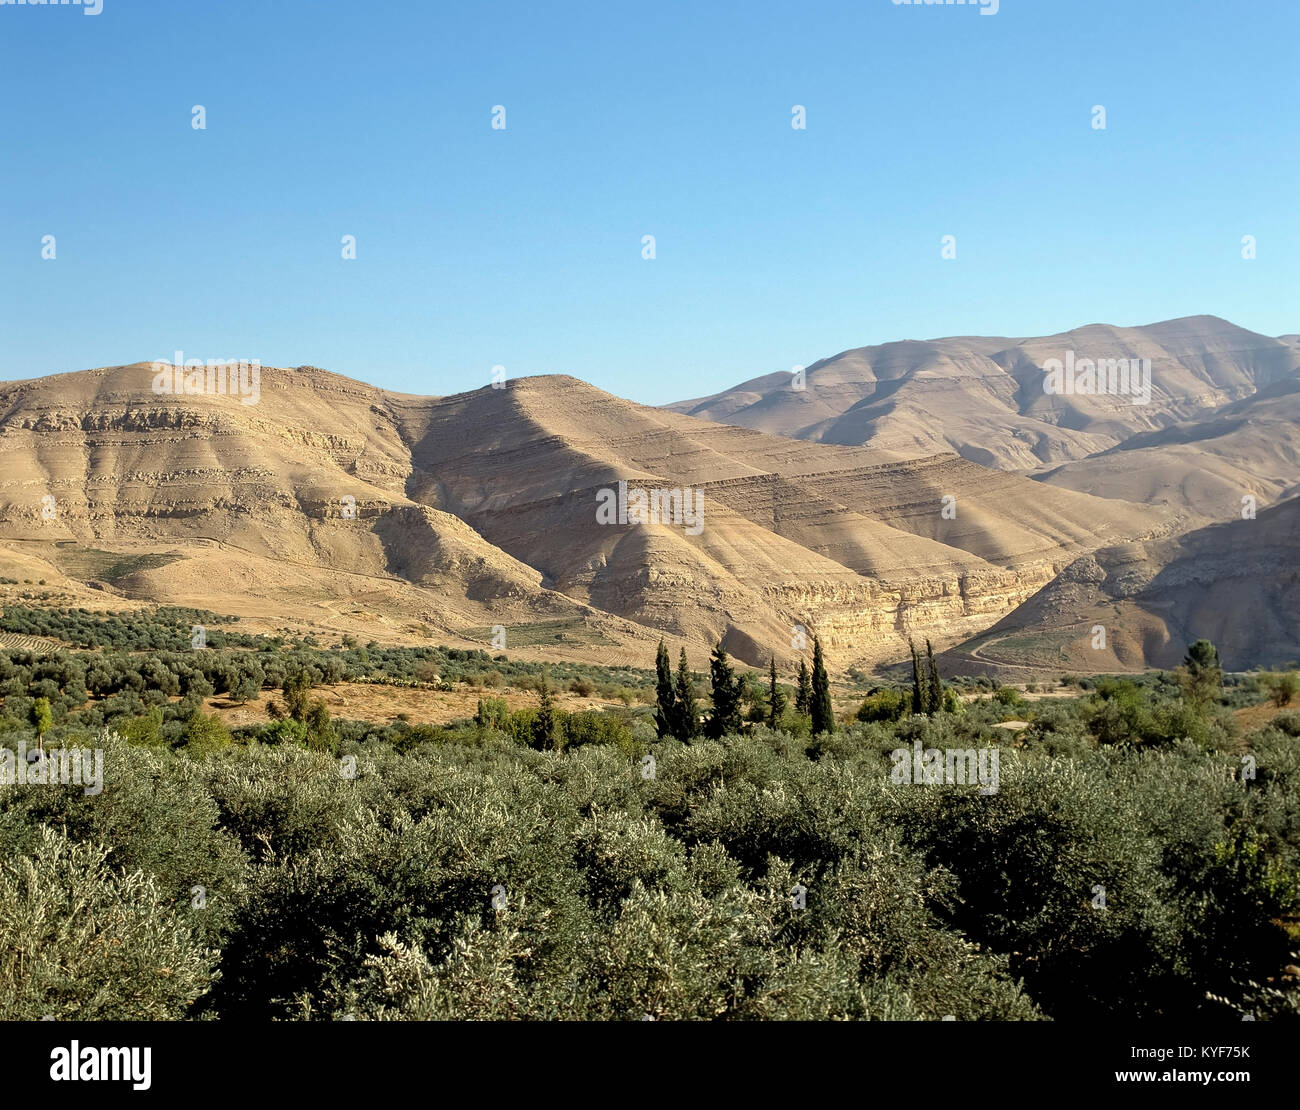 2293. Wadi al Hasa, Tafila Gov, Jordan Stock Photo - Alamy